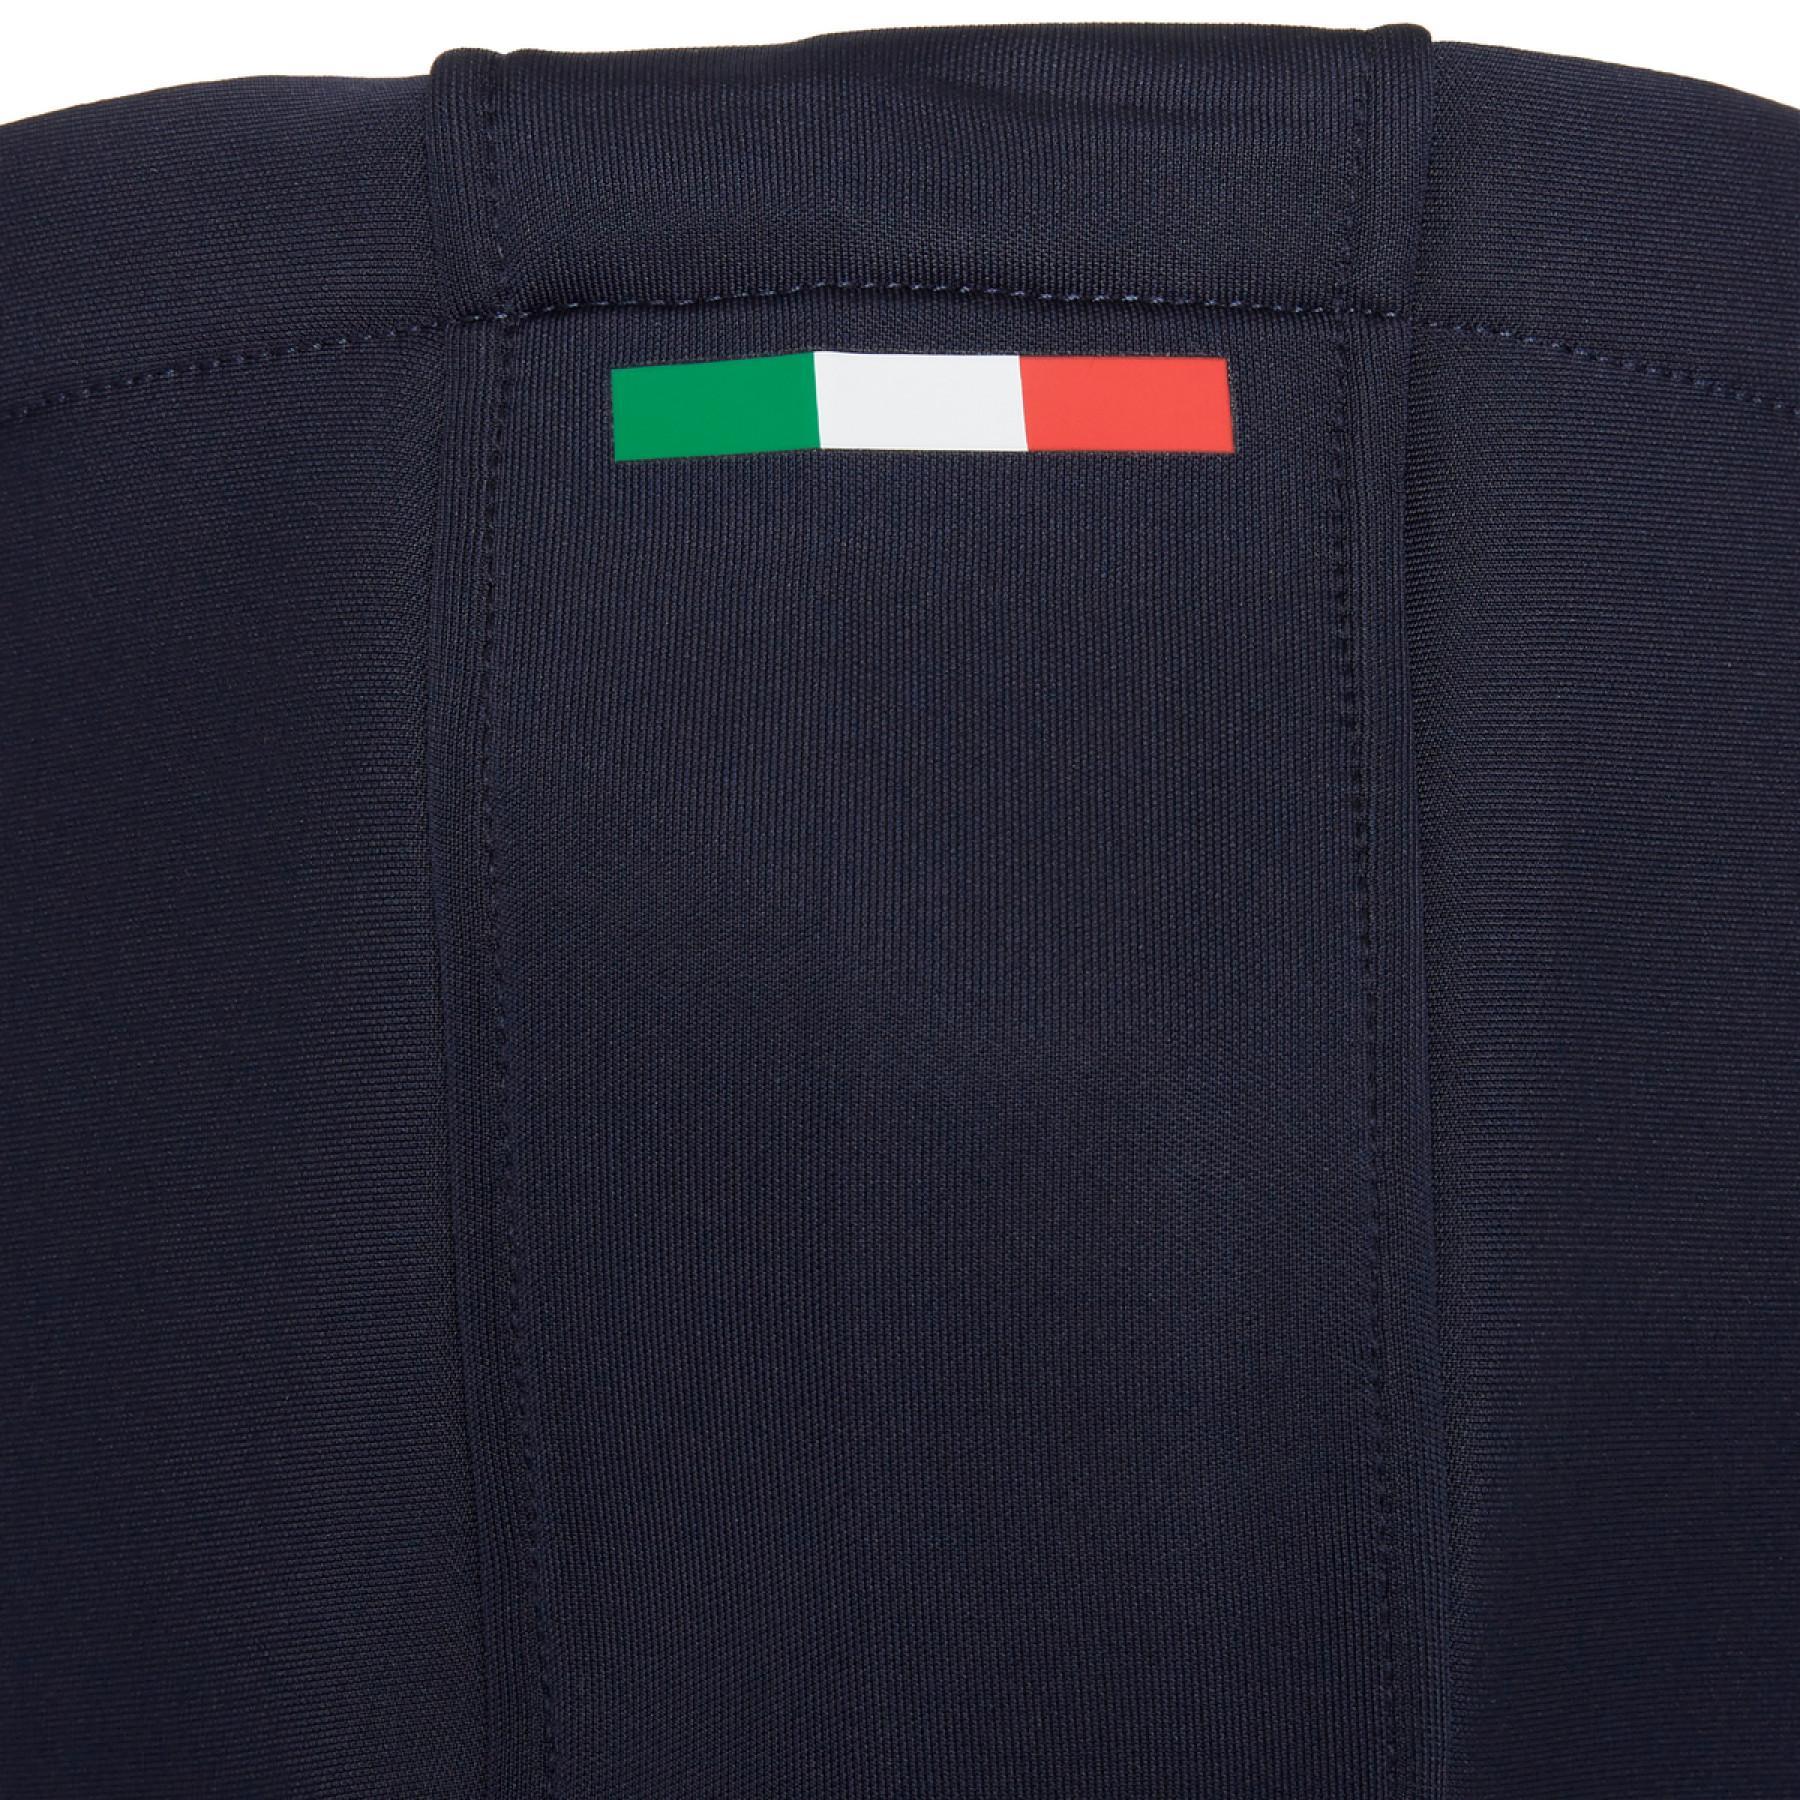 Jacket anthem Italie rugby 2020/21